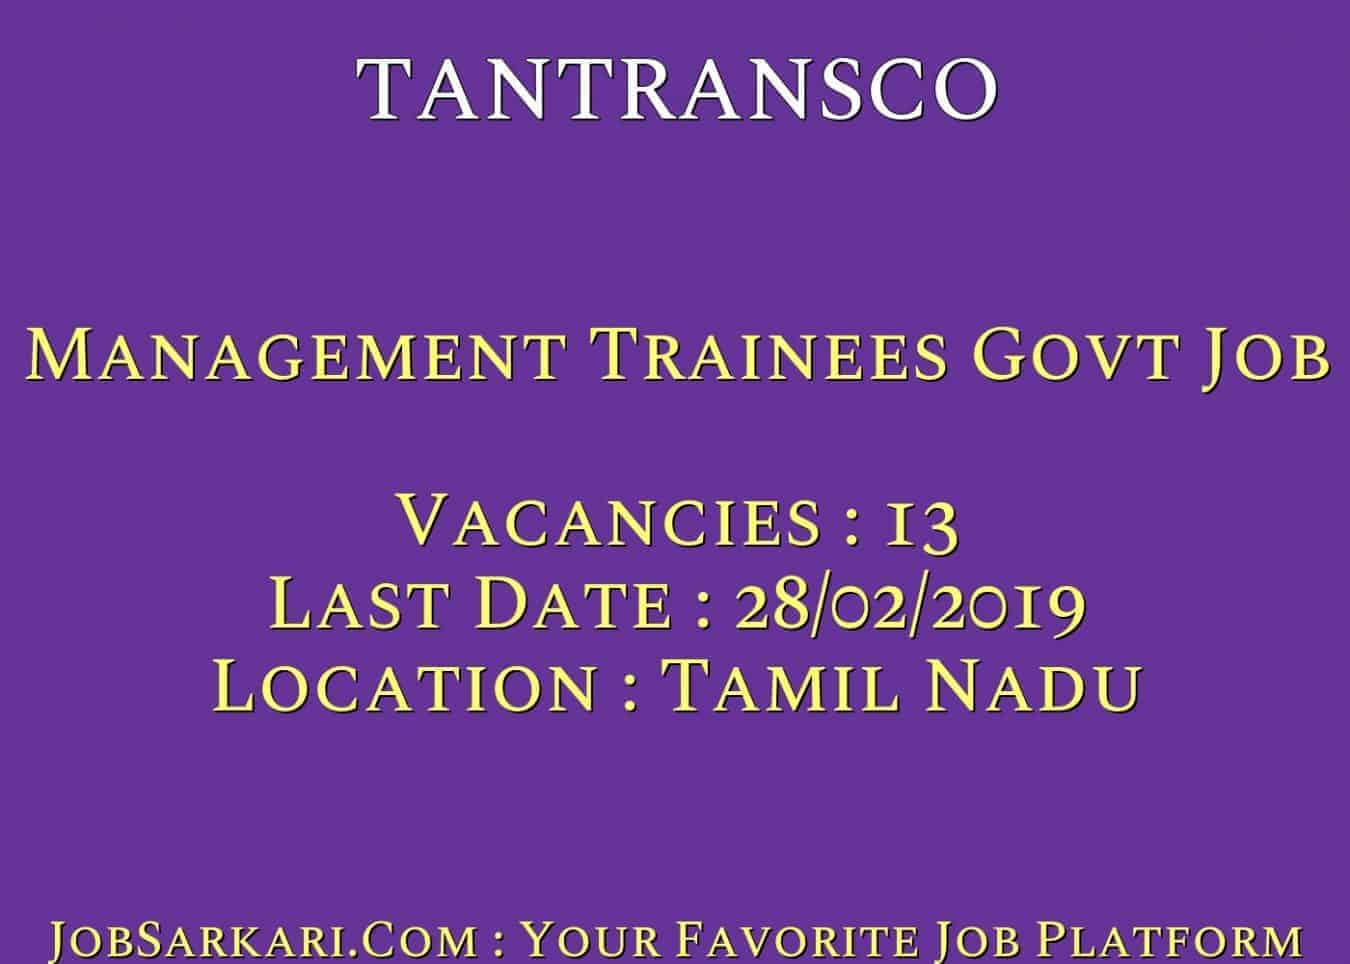 TANTRANSCO Recruitment 2019 For Management Trainees Govt Job